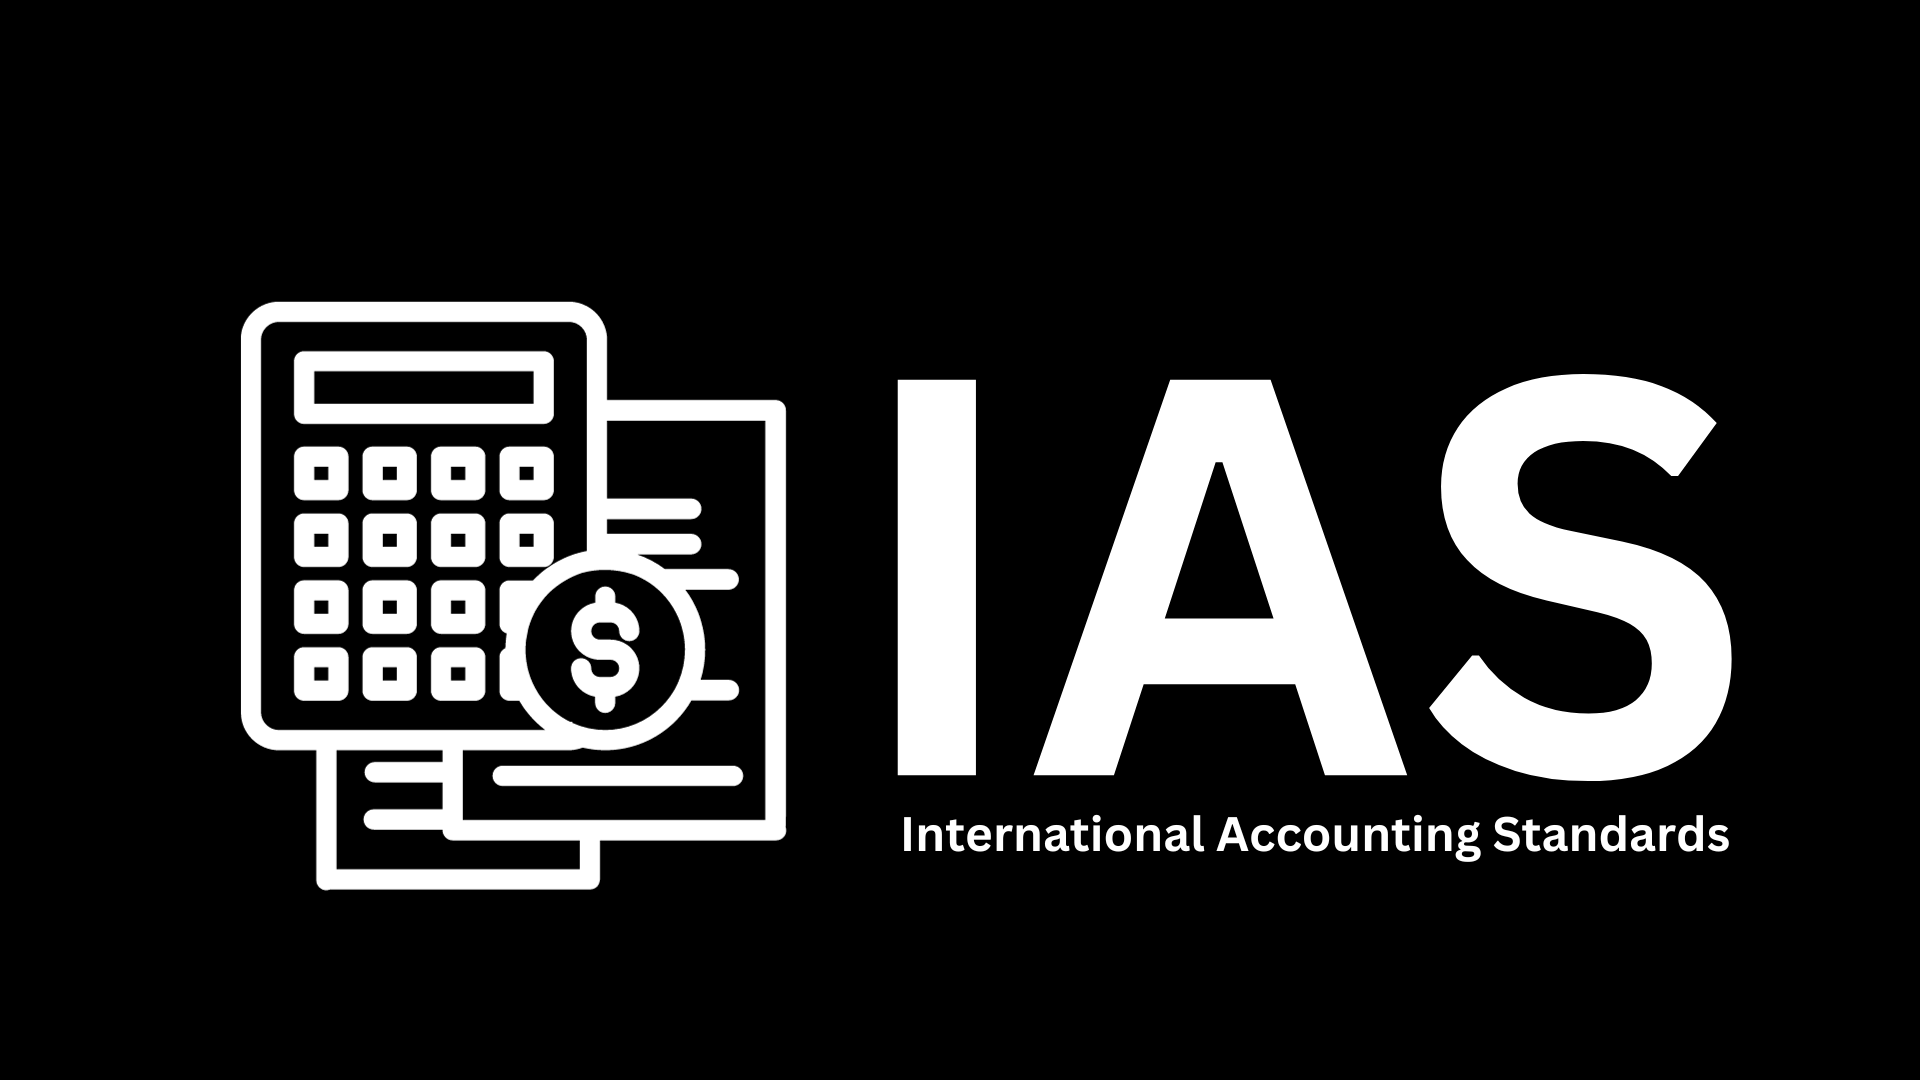 Training on International Accounting Standards (IAS)